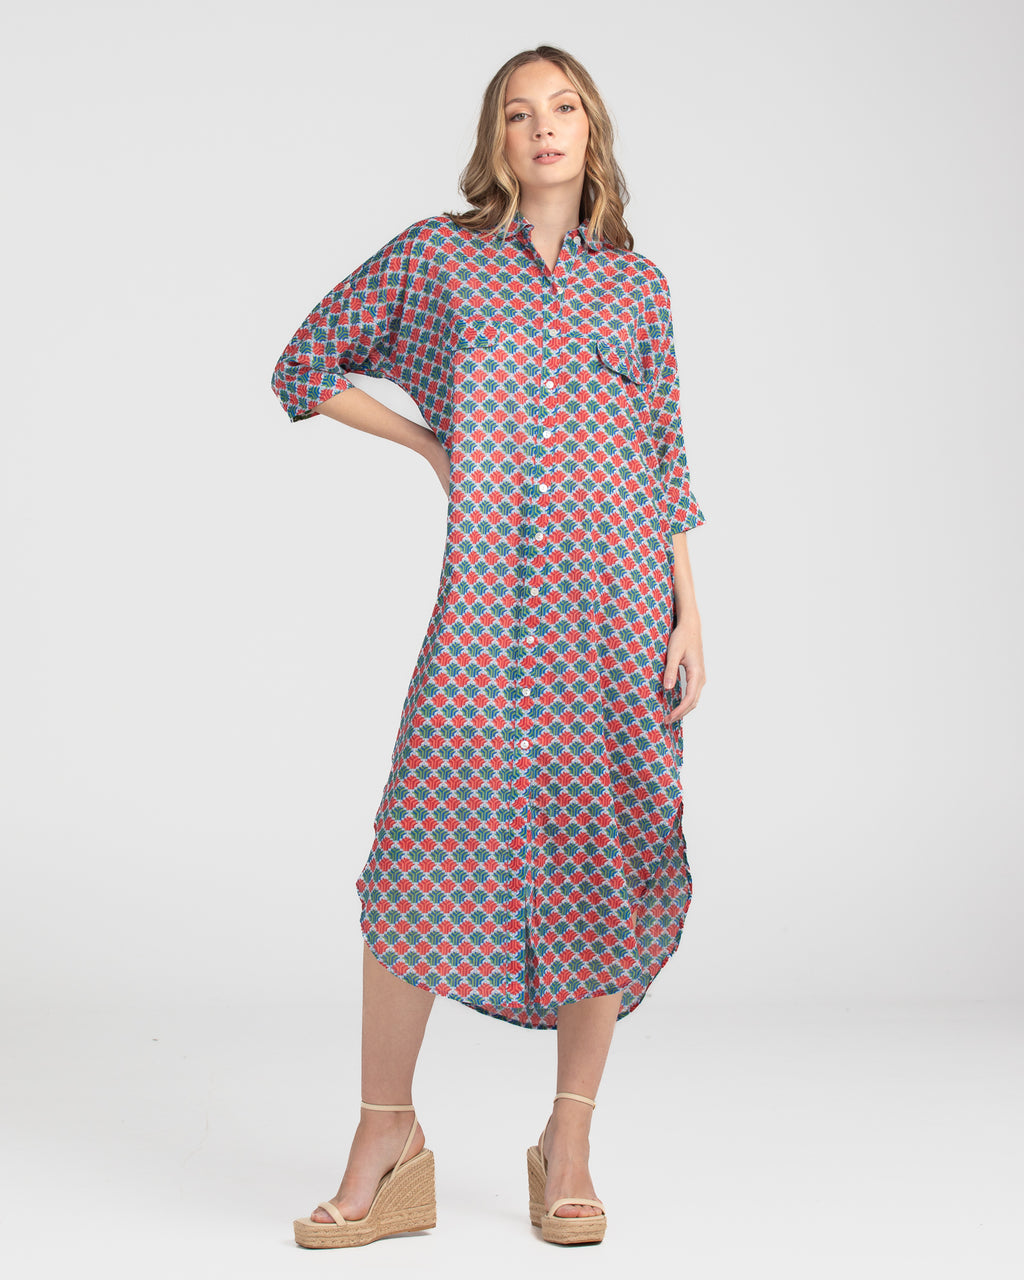 Amari shirt dress by boom shankar is a button up midi length dress in a small geometric print